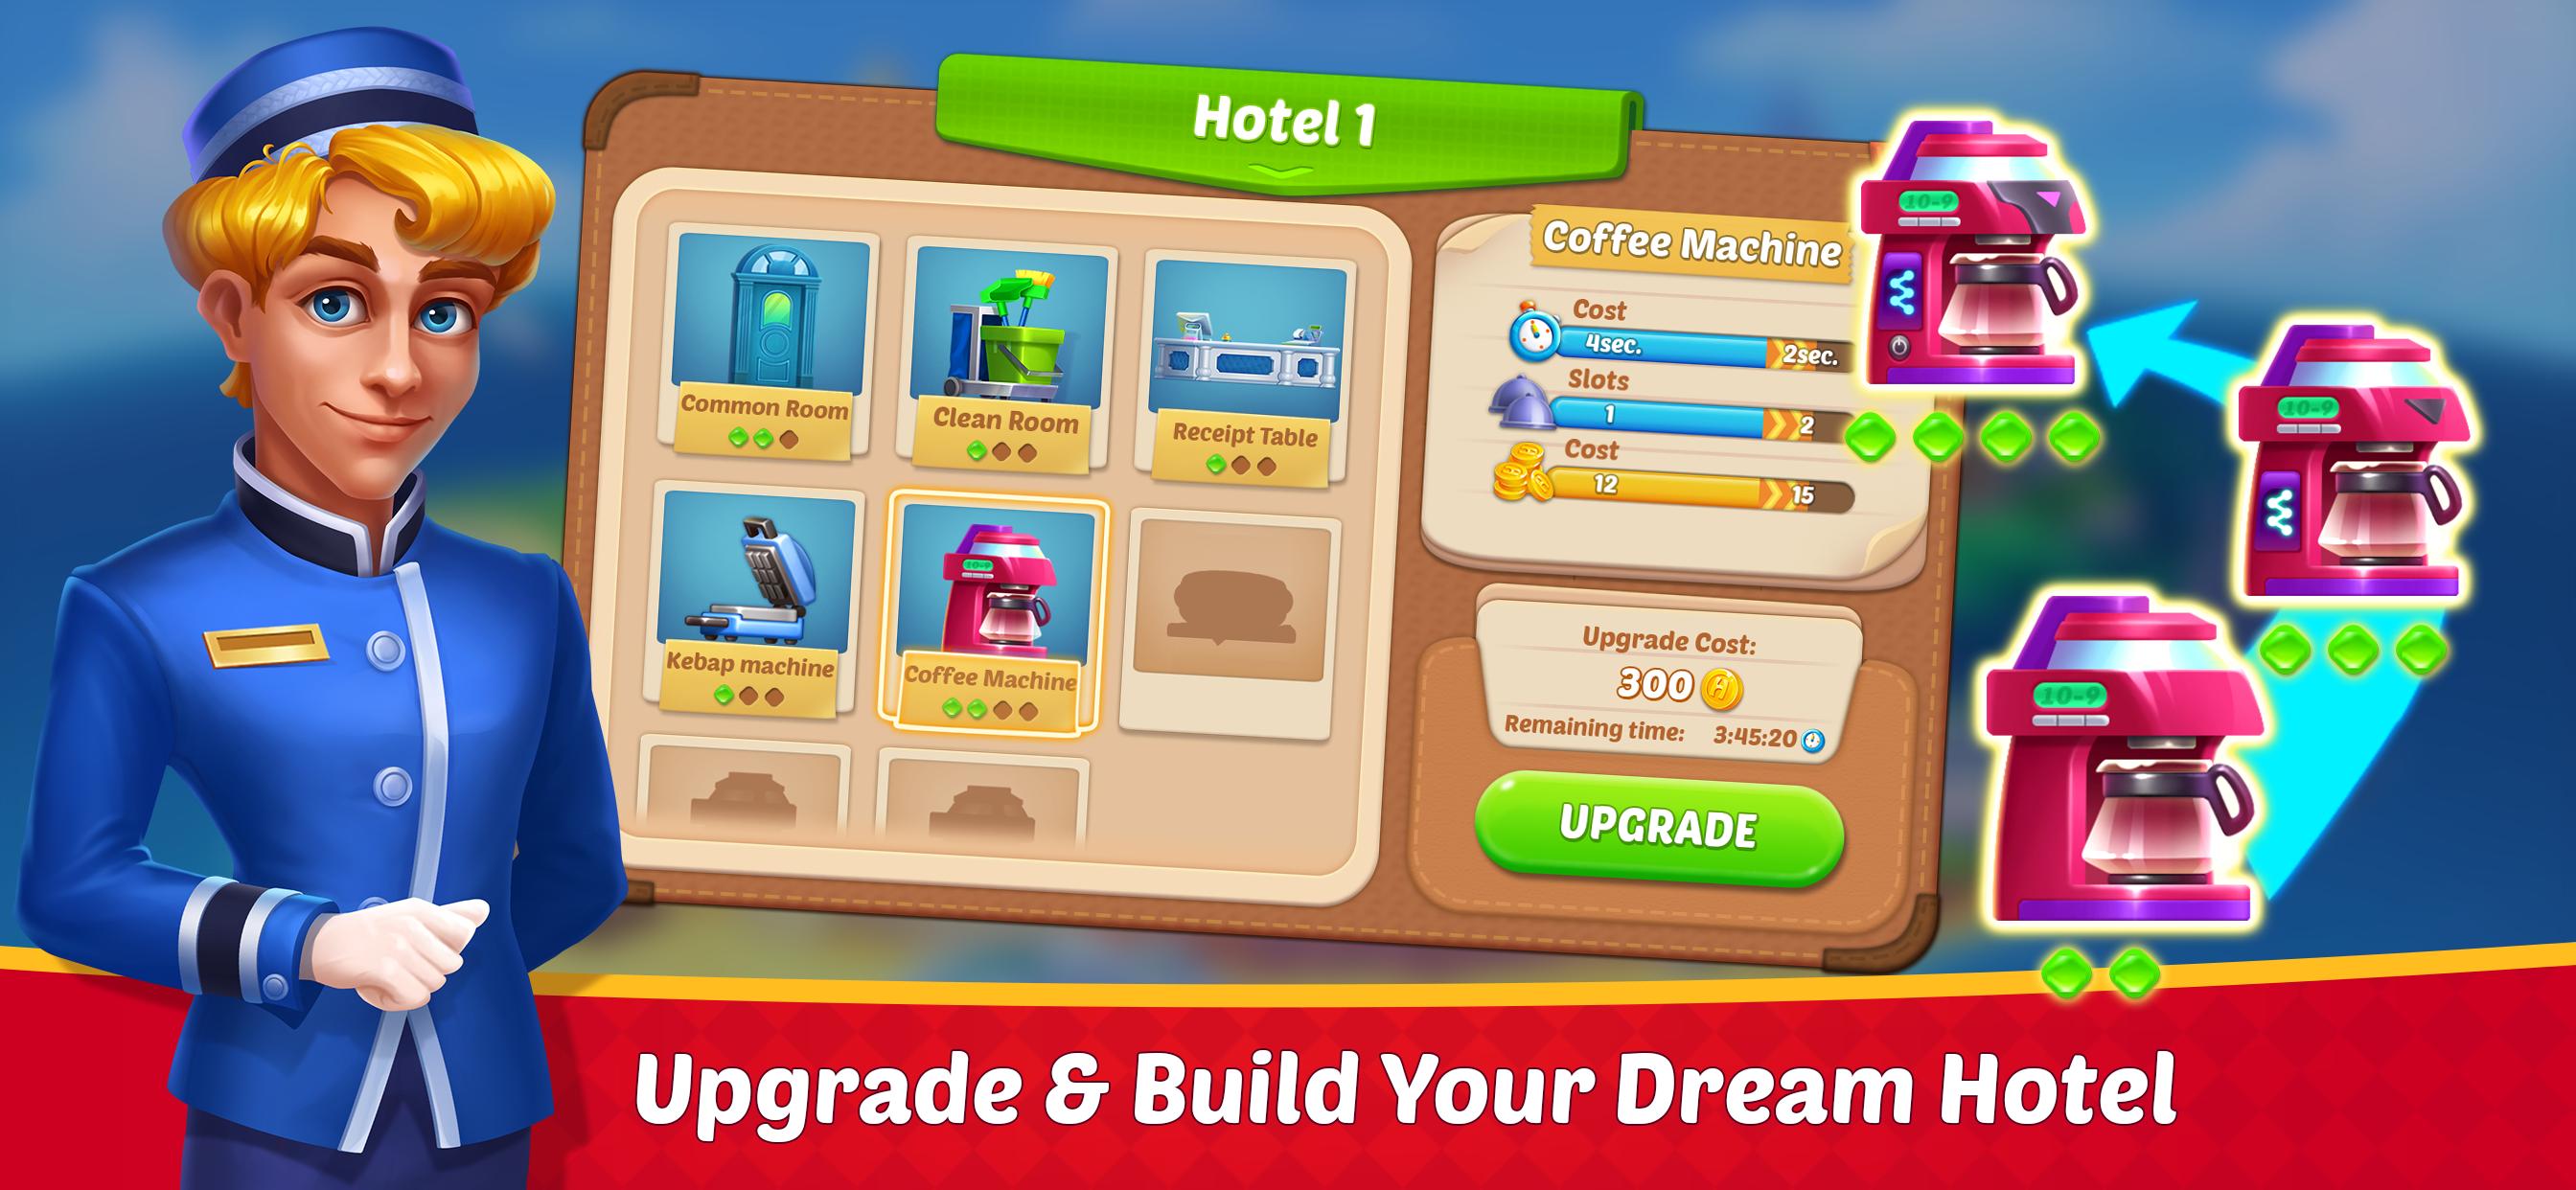 Dream Hotel Hotel Manager Simulation games 1.2.4 Screenshot 18